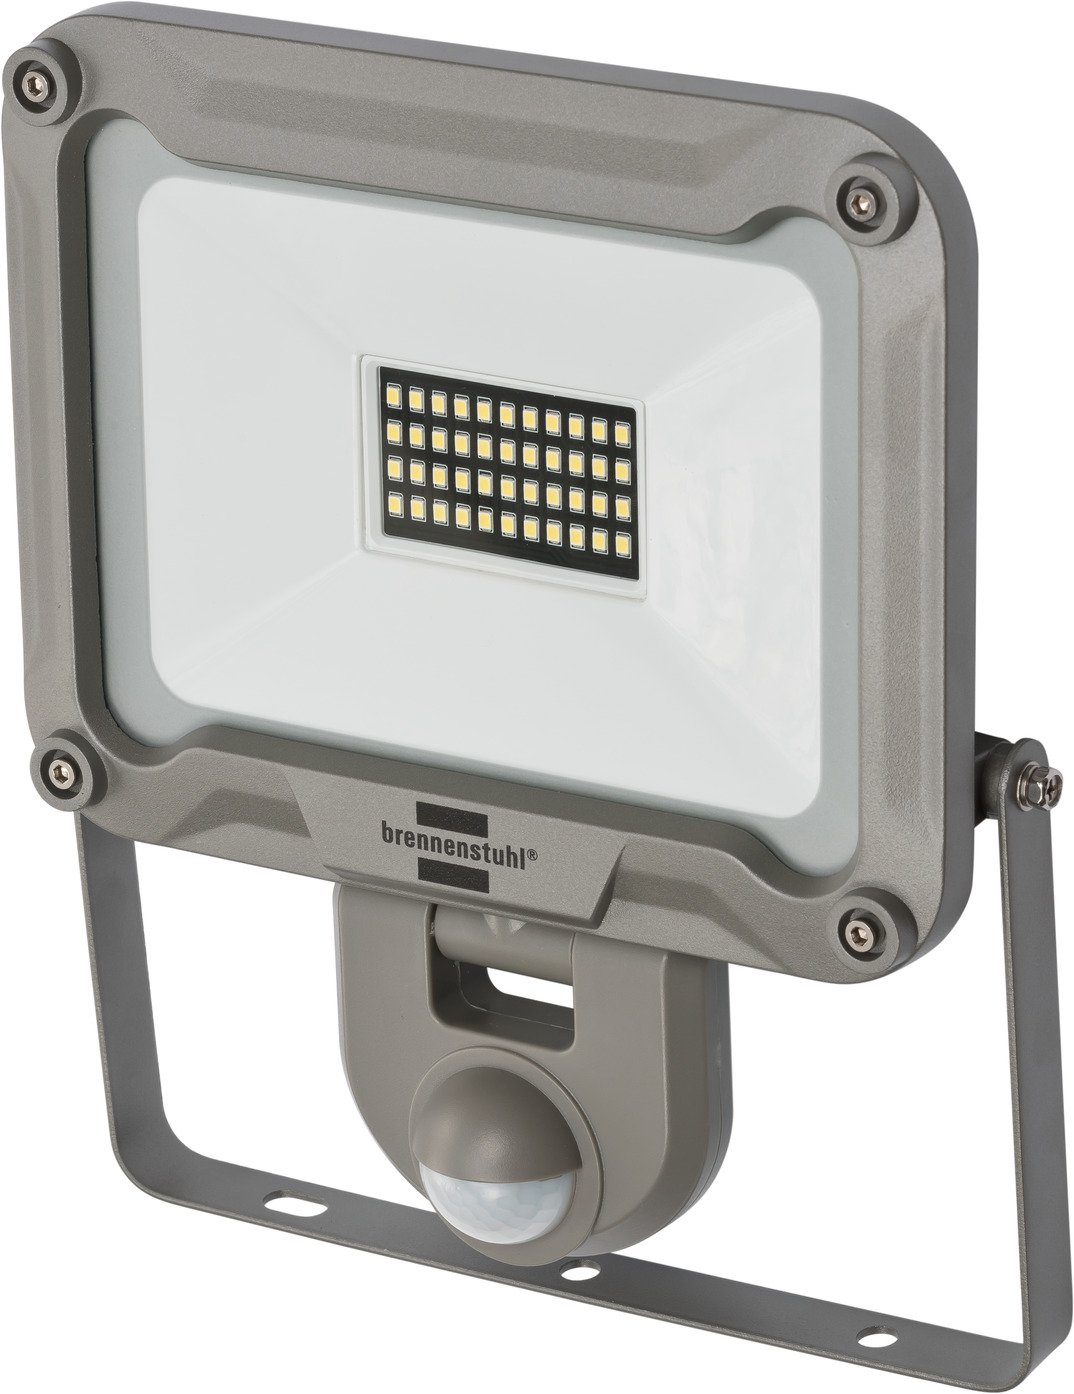 weggooien Wordt erger Misverstand LED-bouwlamp JARO 3050 P met infrarood bewegingsmelder 2650lm, 30W, IP54 |  brennenstuhl®